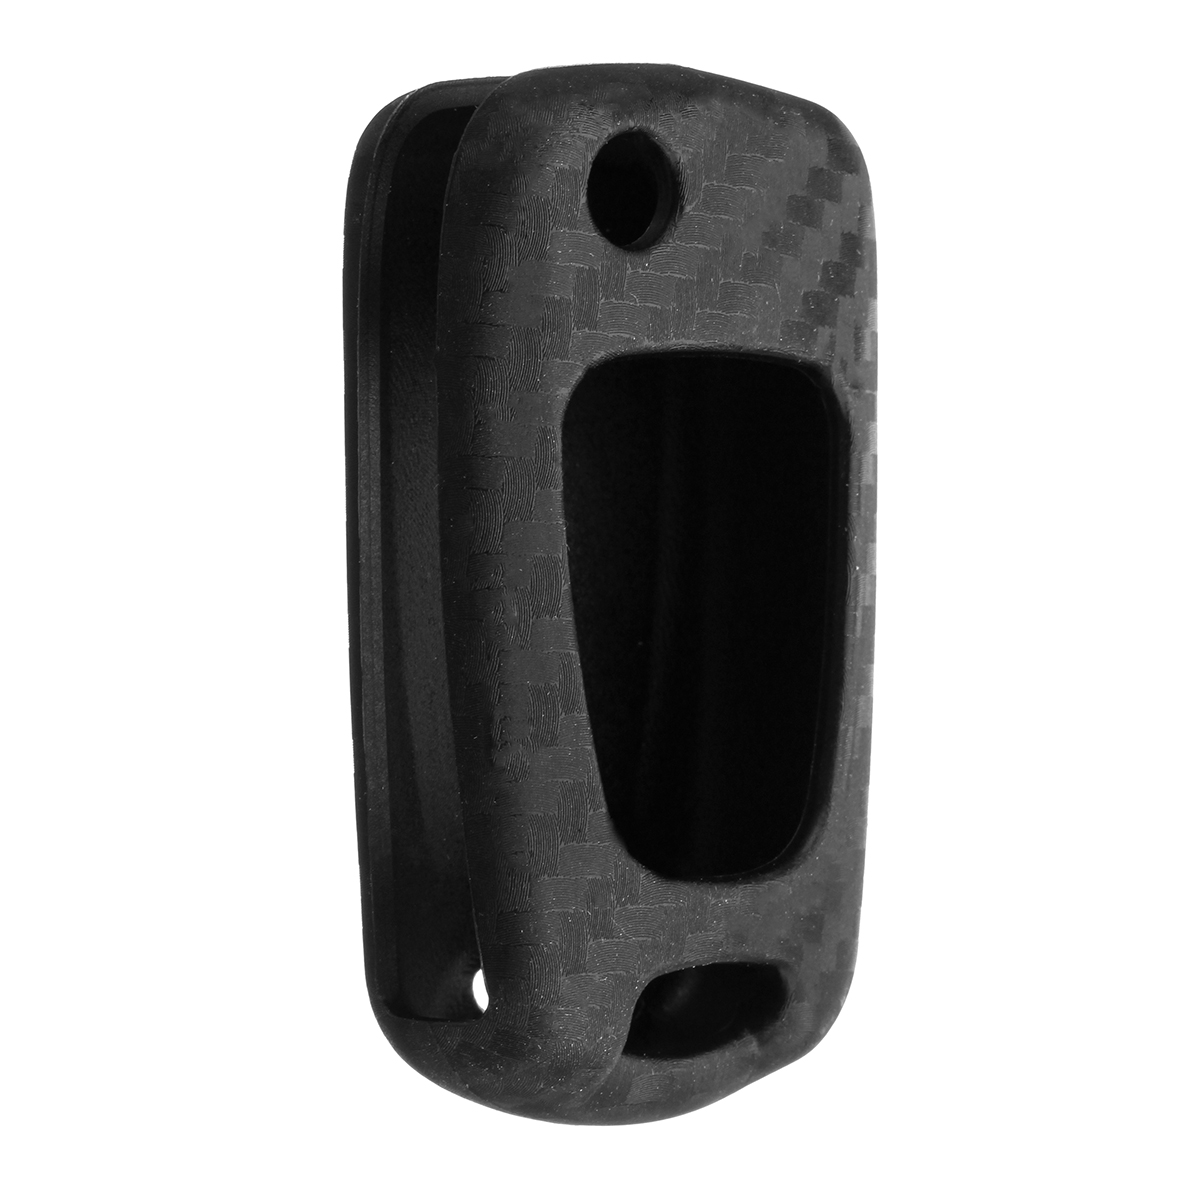 

3 Button Carbon Fiber Style Silicone Remote Key Case For Hyundai I20 I30 IX35